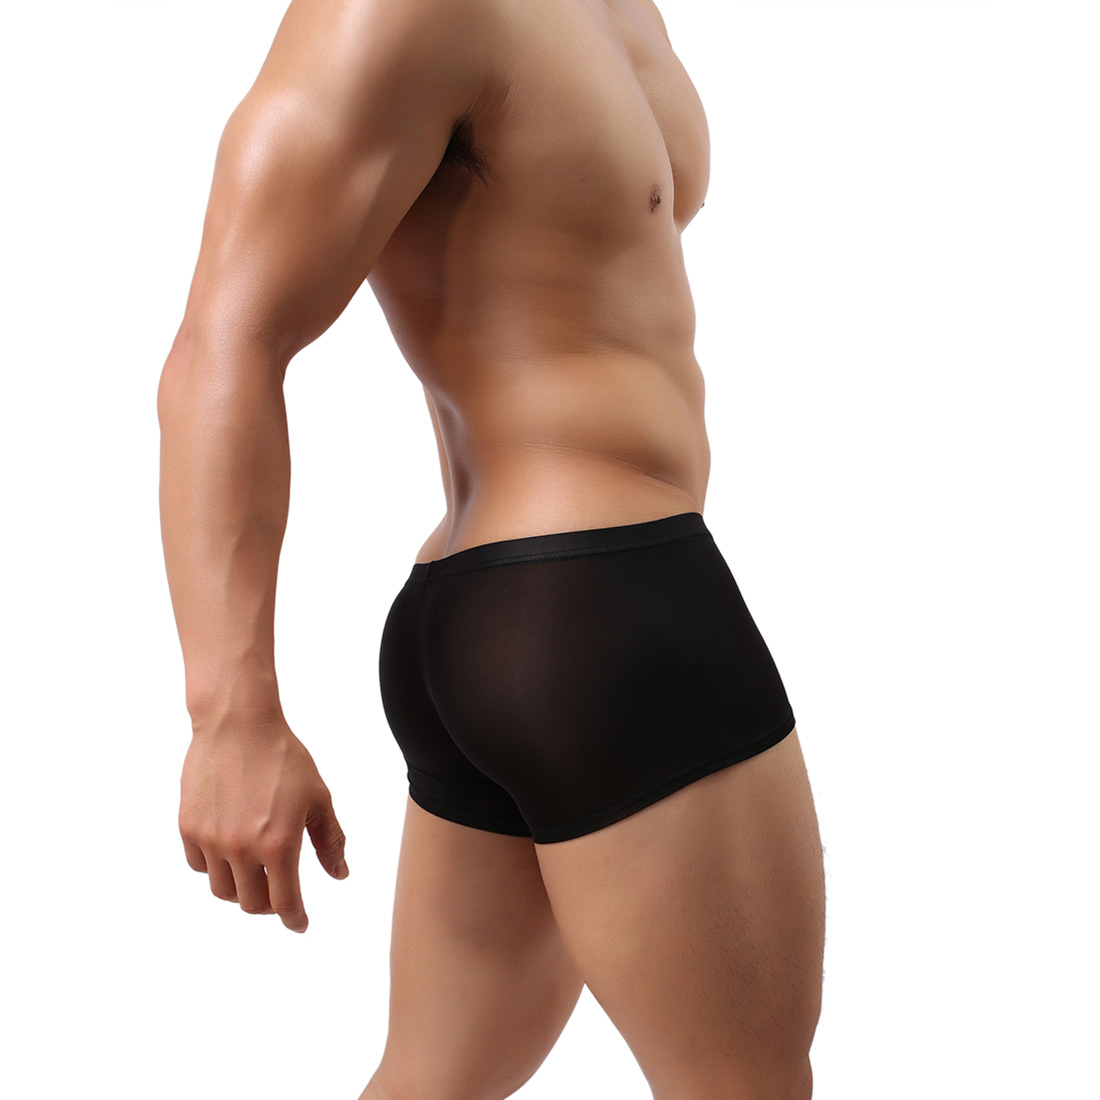 Men's Sexy Lingerie Underwear See-through Boxer Shorts Underpants WH42 Black M